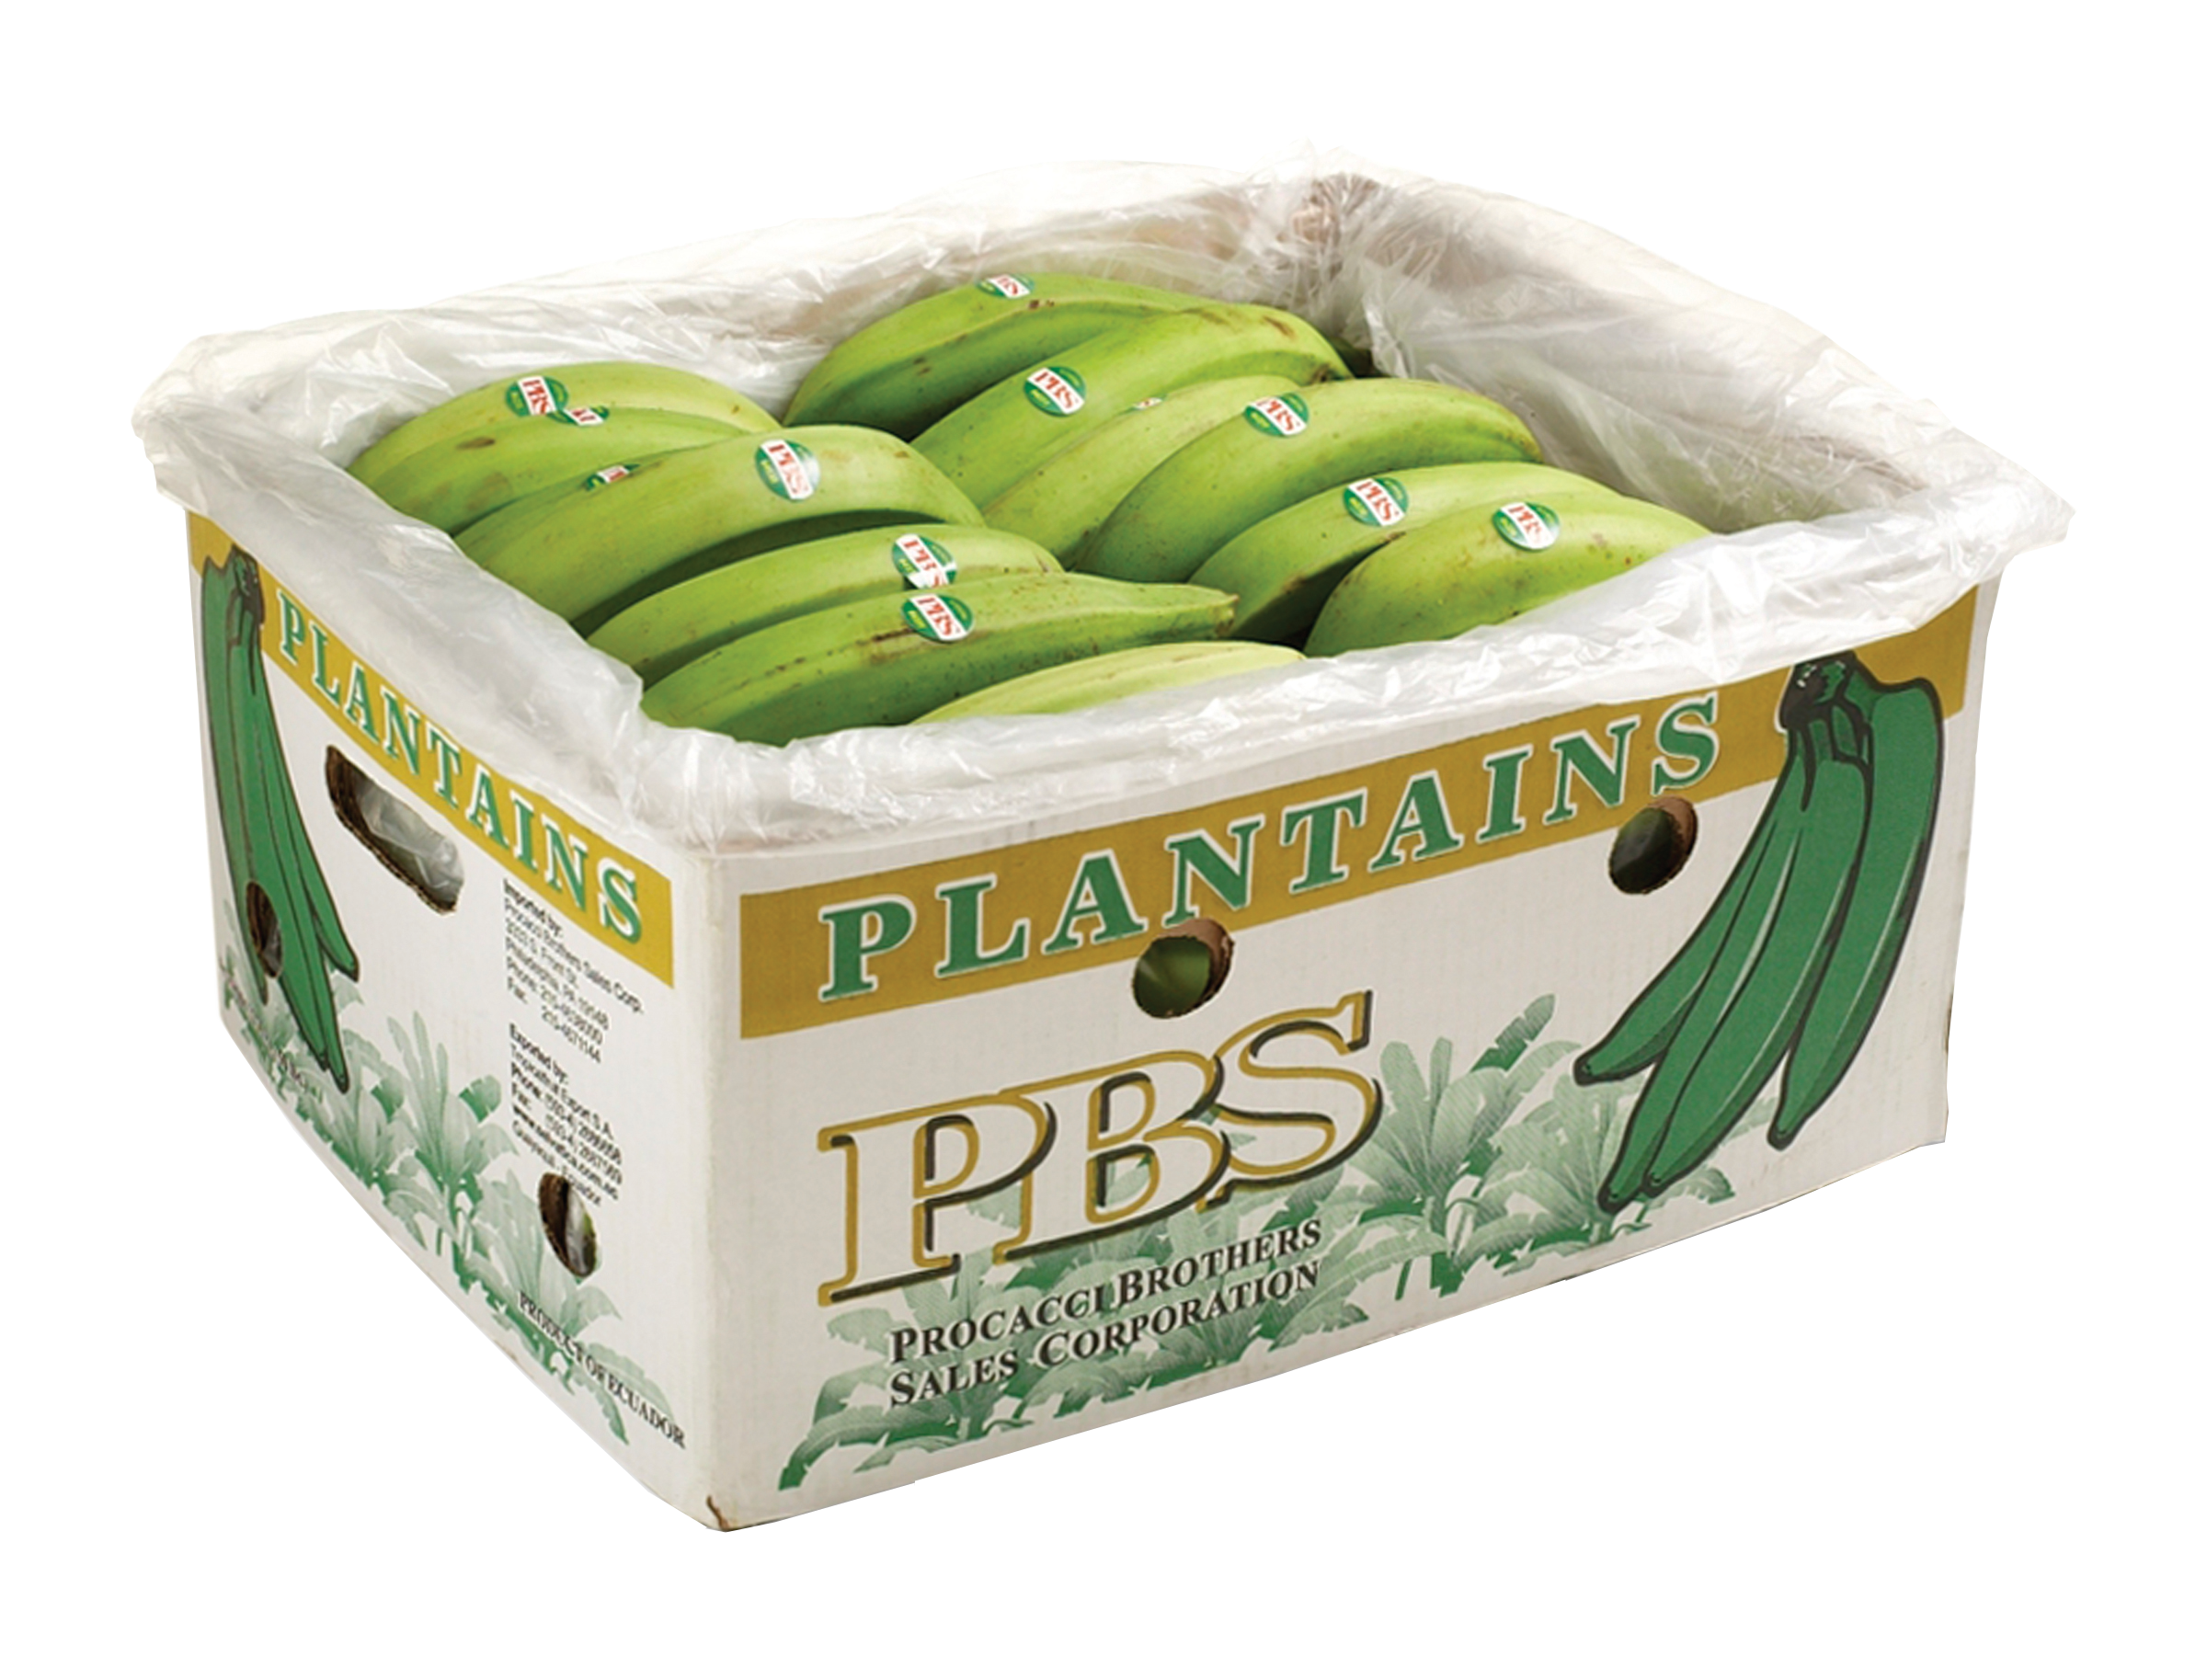 Green Plantains in PBS box